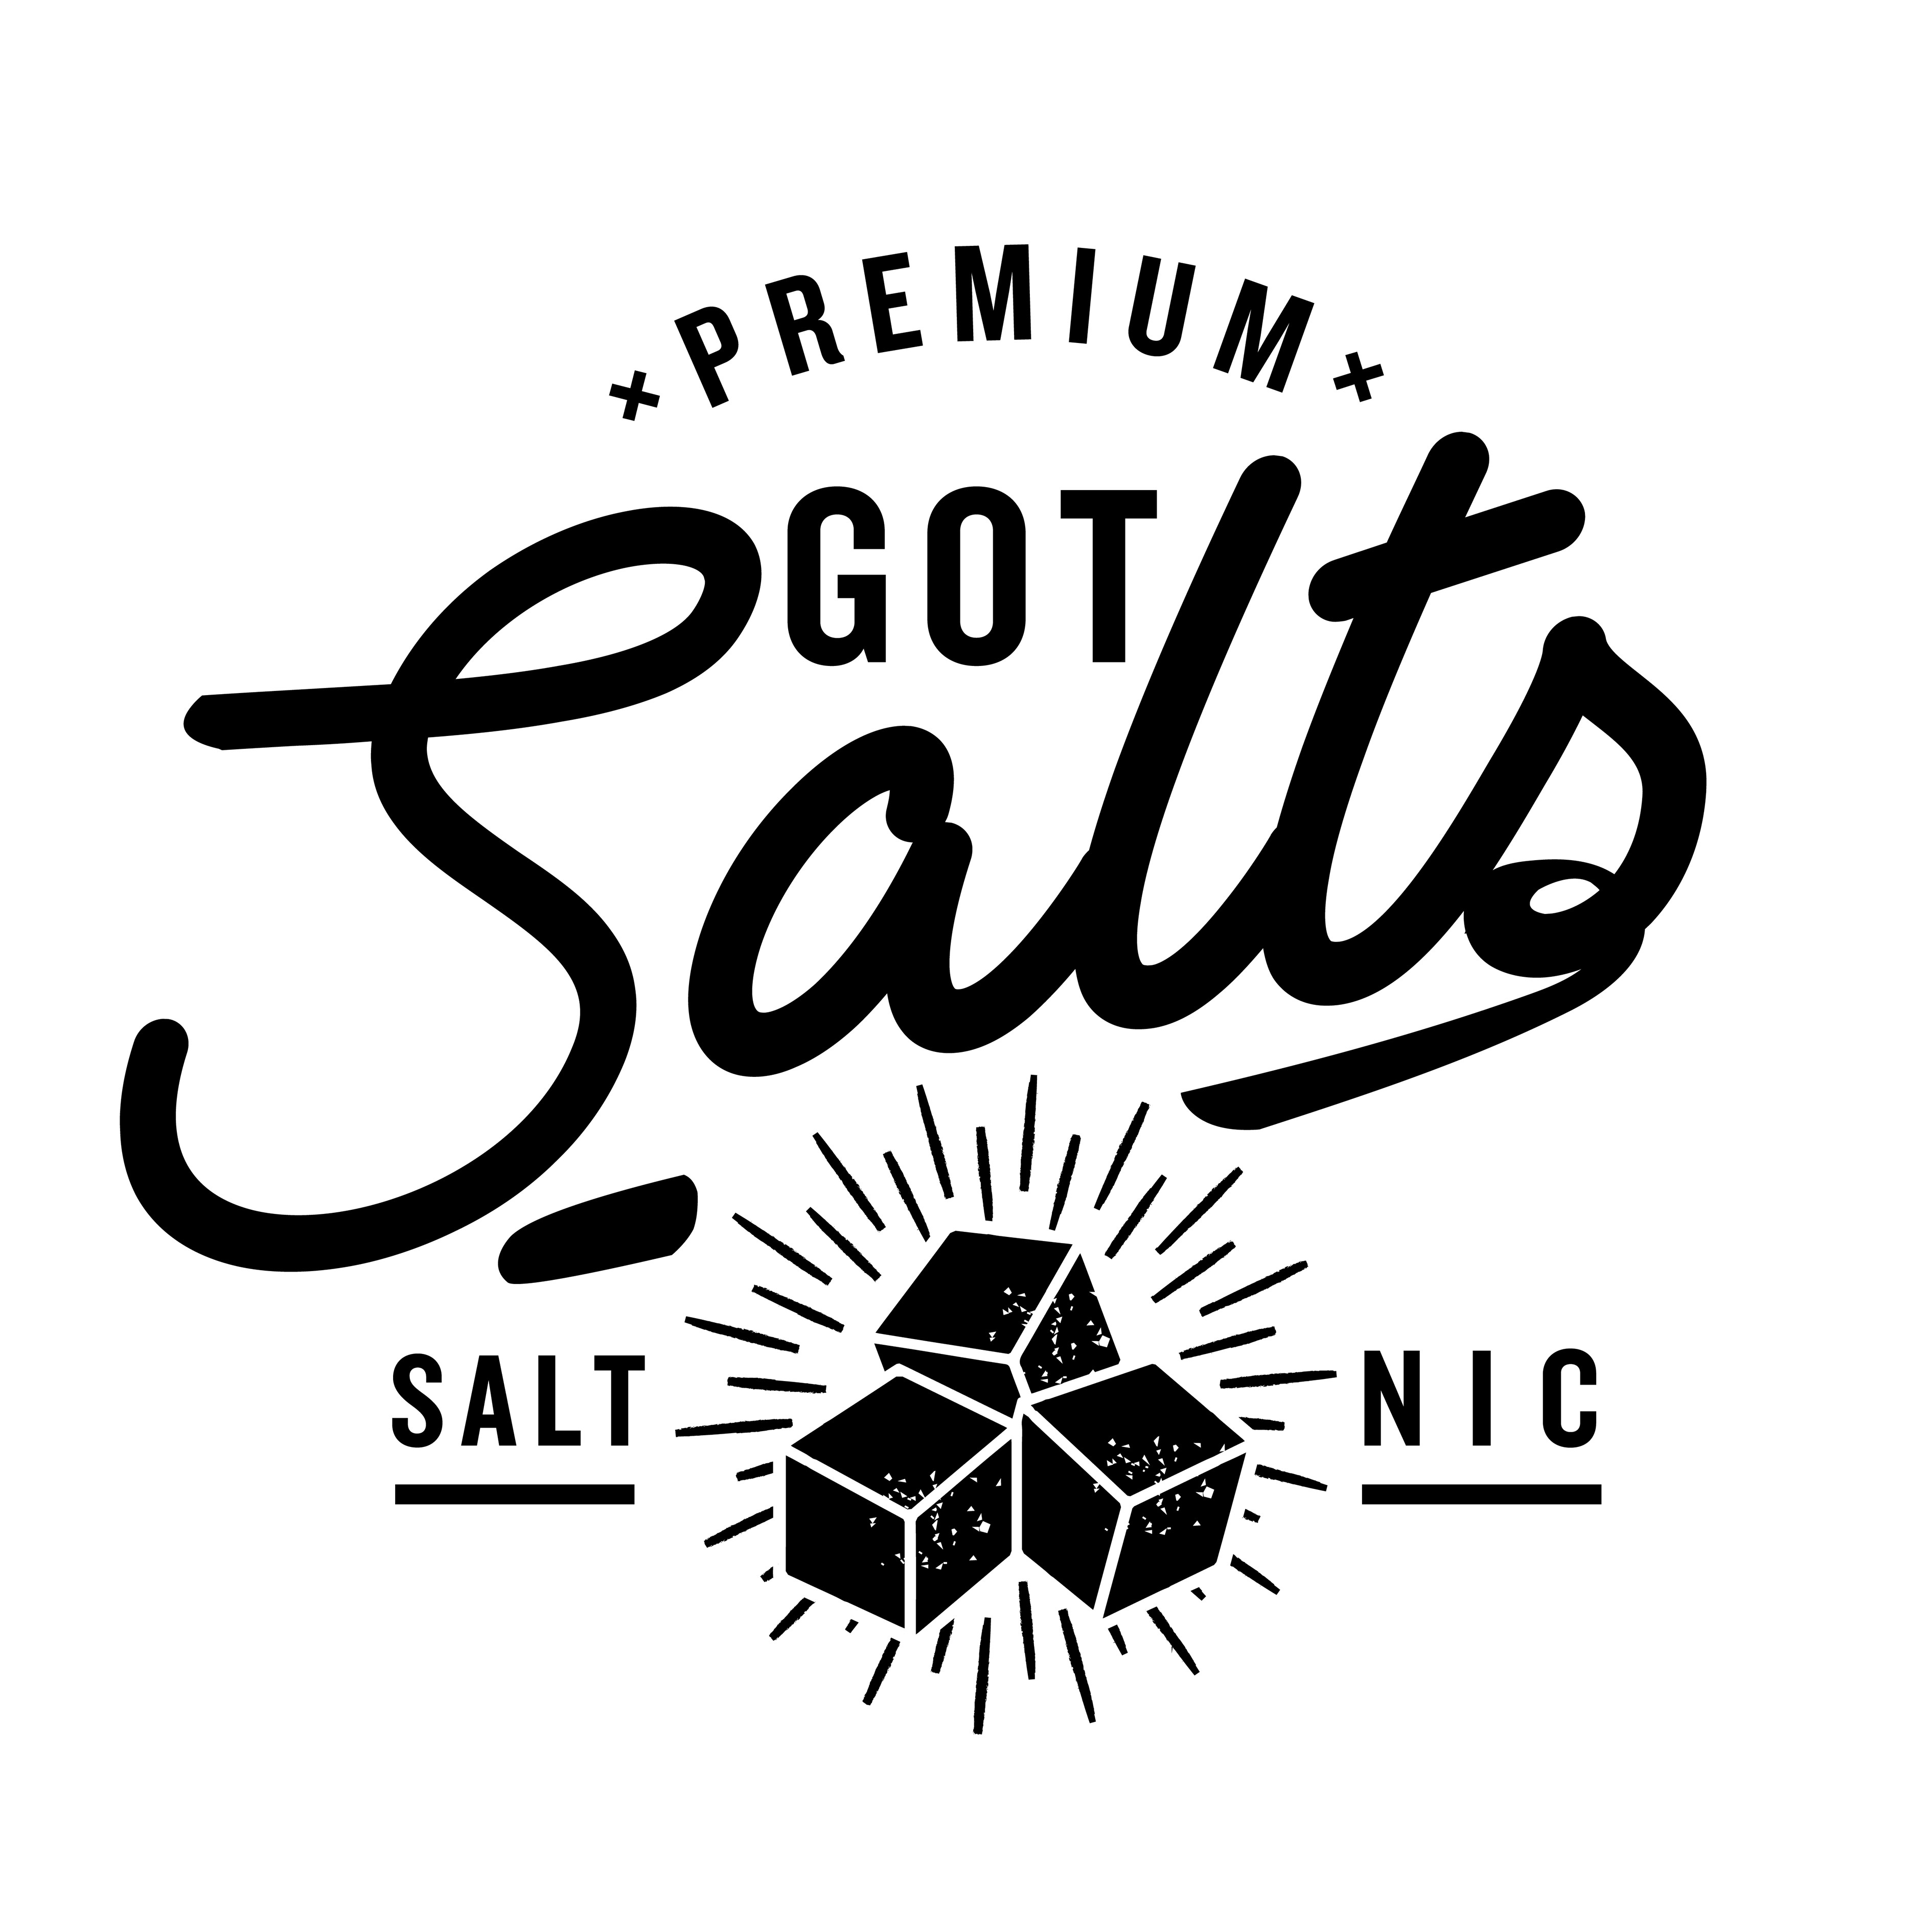 Got Salts